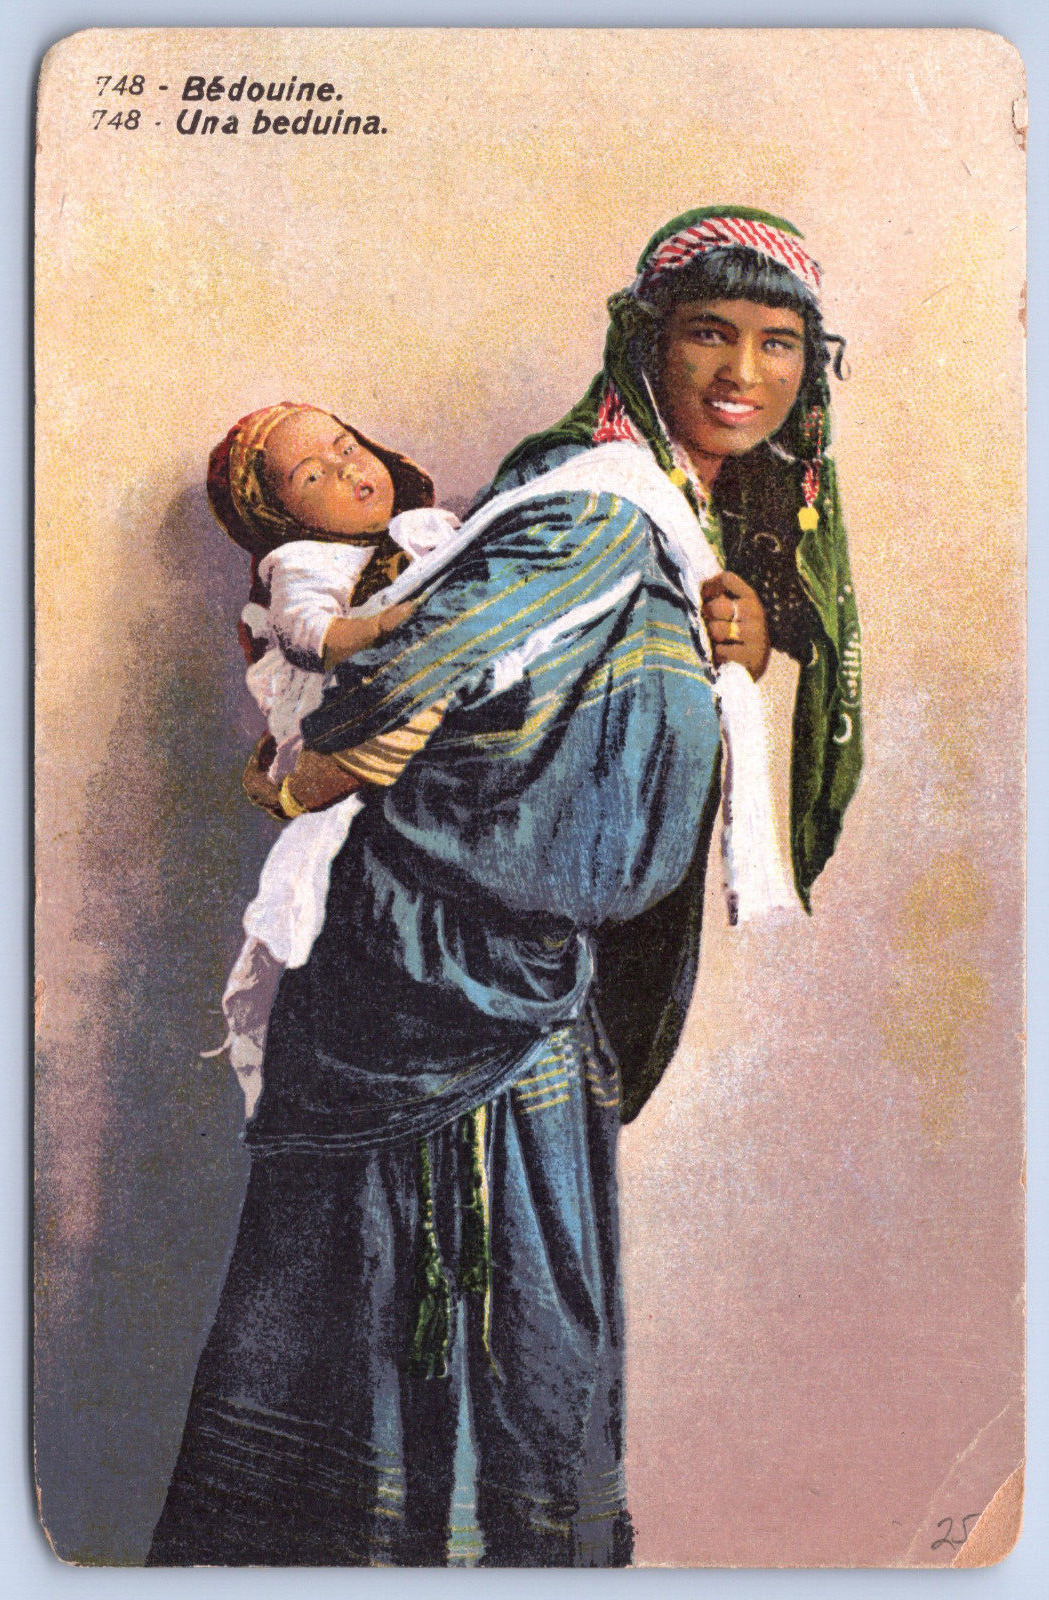 Bedouin Woman and Baby Ethnic Egypt Arab Vintage Postcard